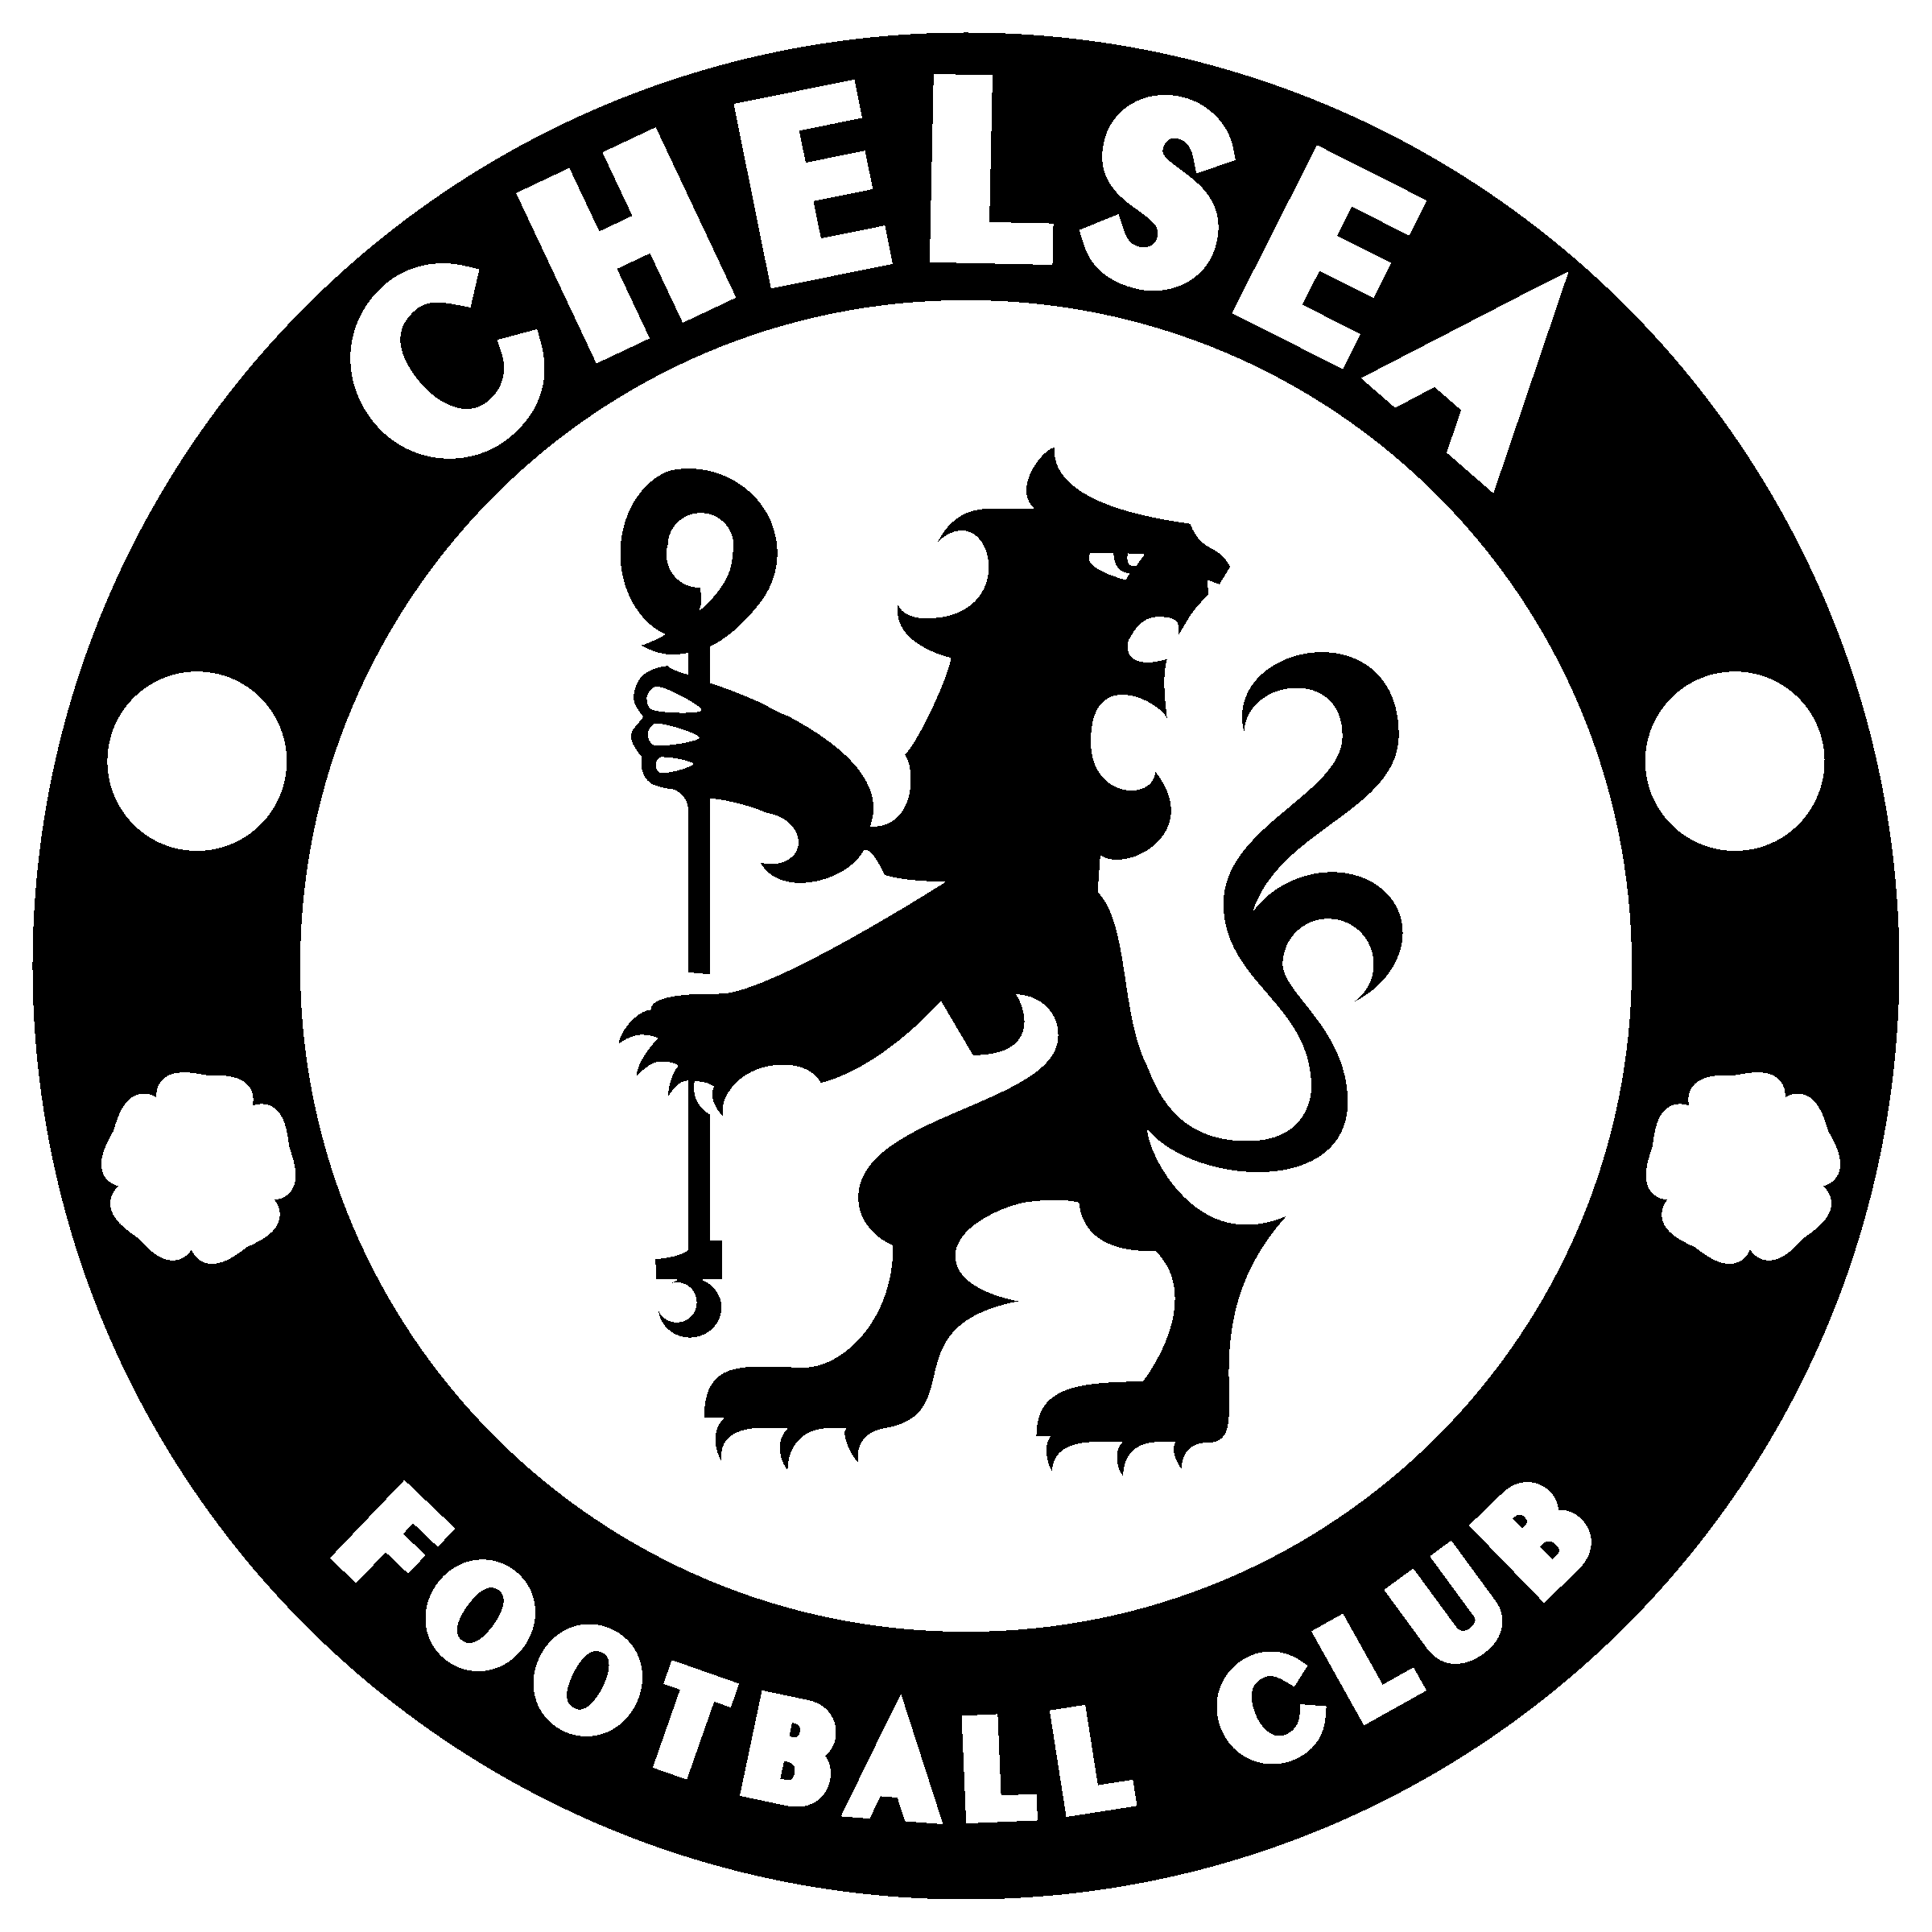 Chelsea Football Club.png